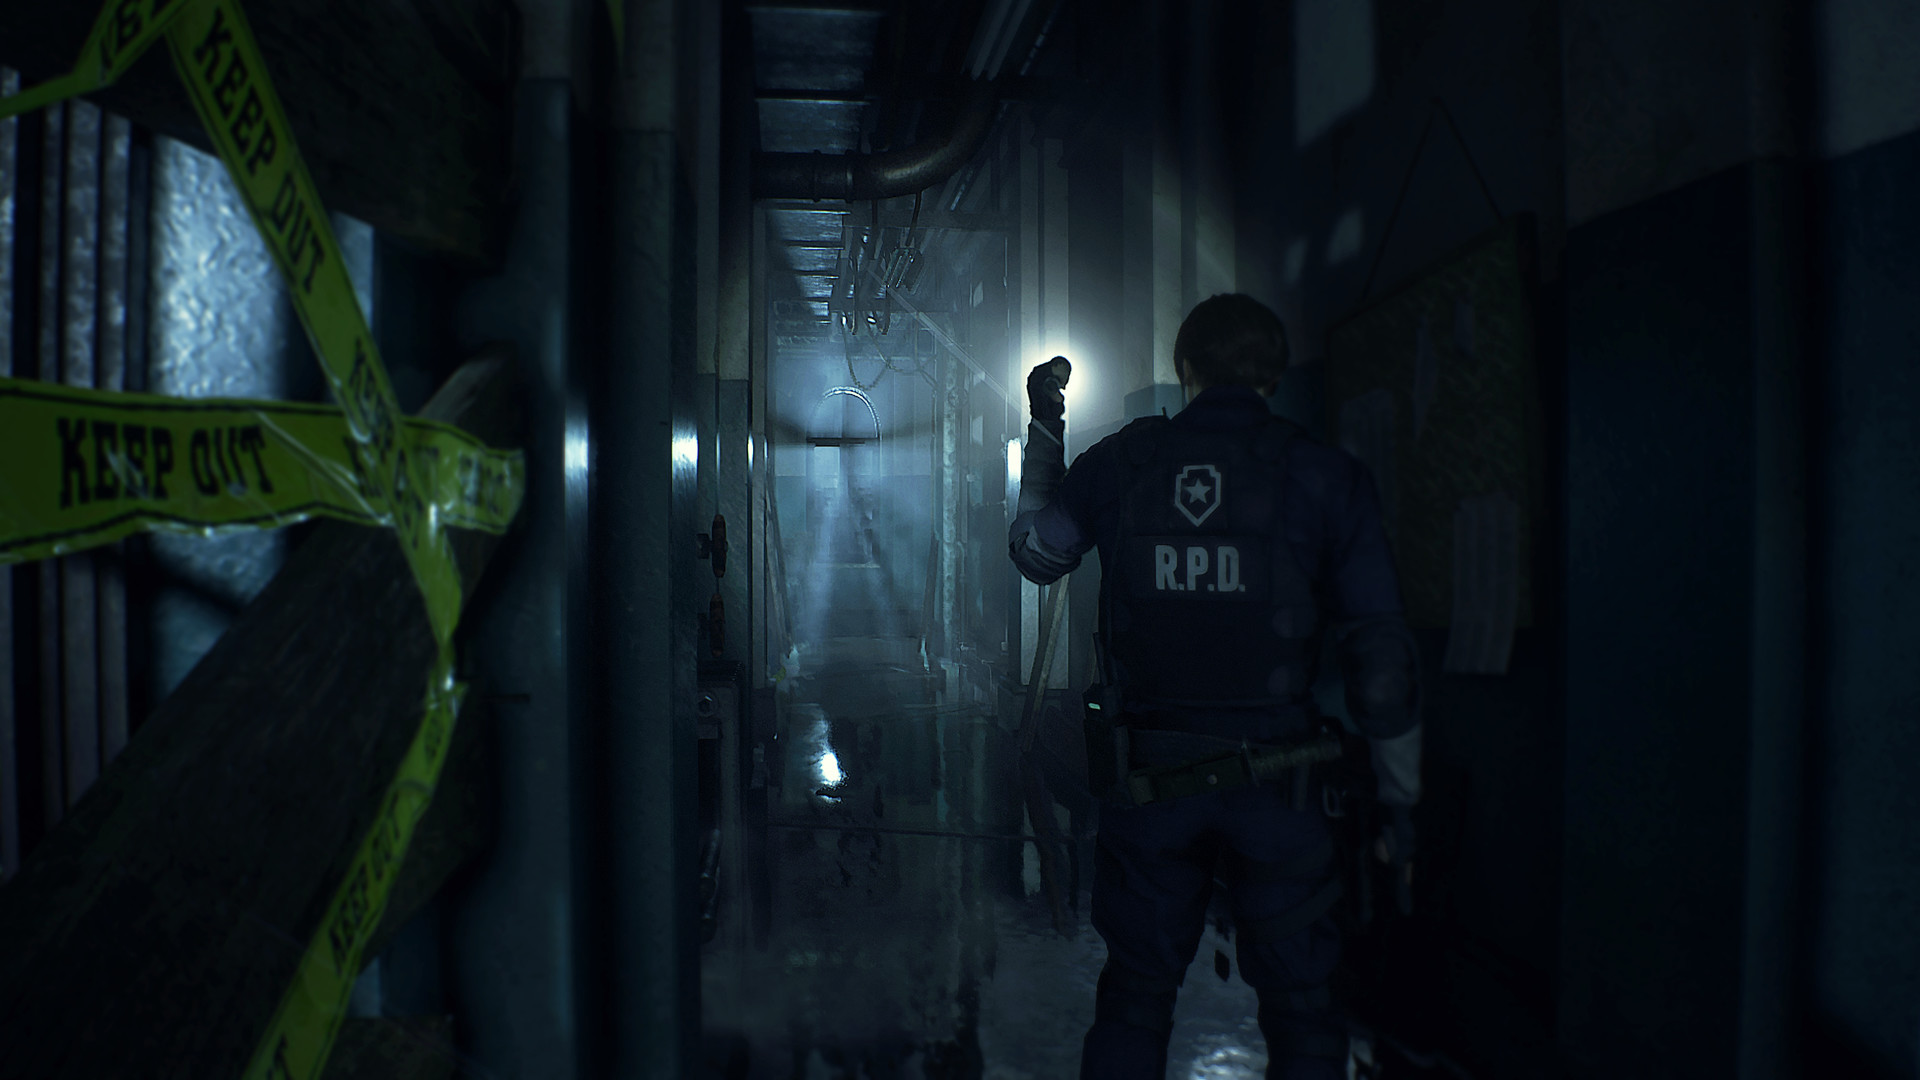 Resident Evil 2 ทำยอดขายไปเกินกว่า 9.3 ล้านชุด ทำให้ยอดขายของซีรีส์โดยรวมเพิ่มขึ้นเป็น 123 ล้านชุดแล้ว